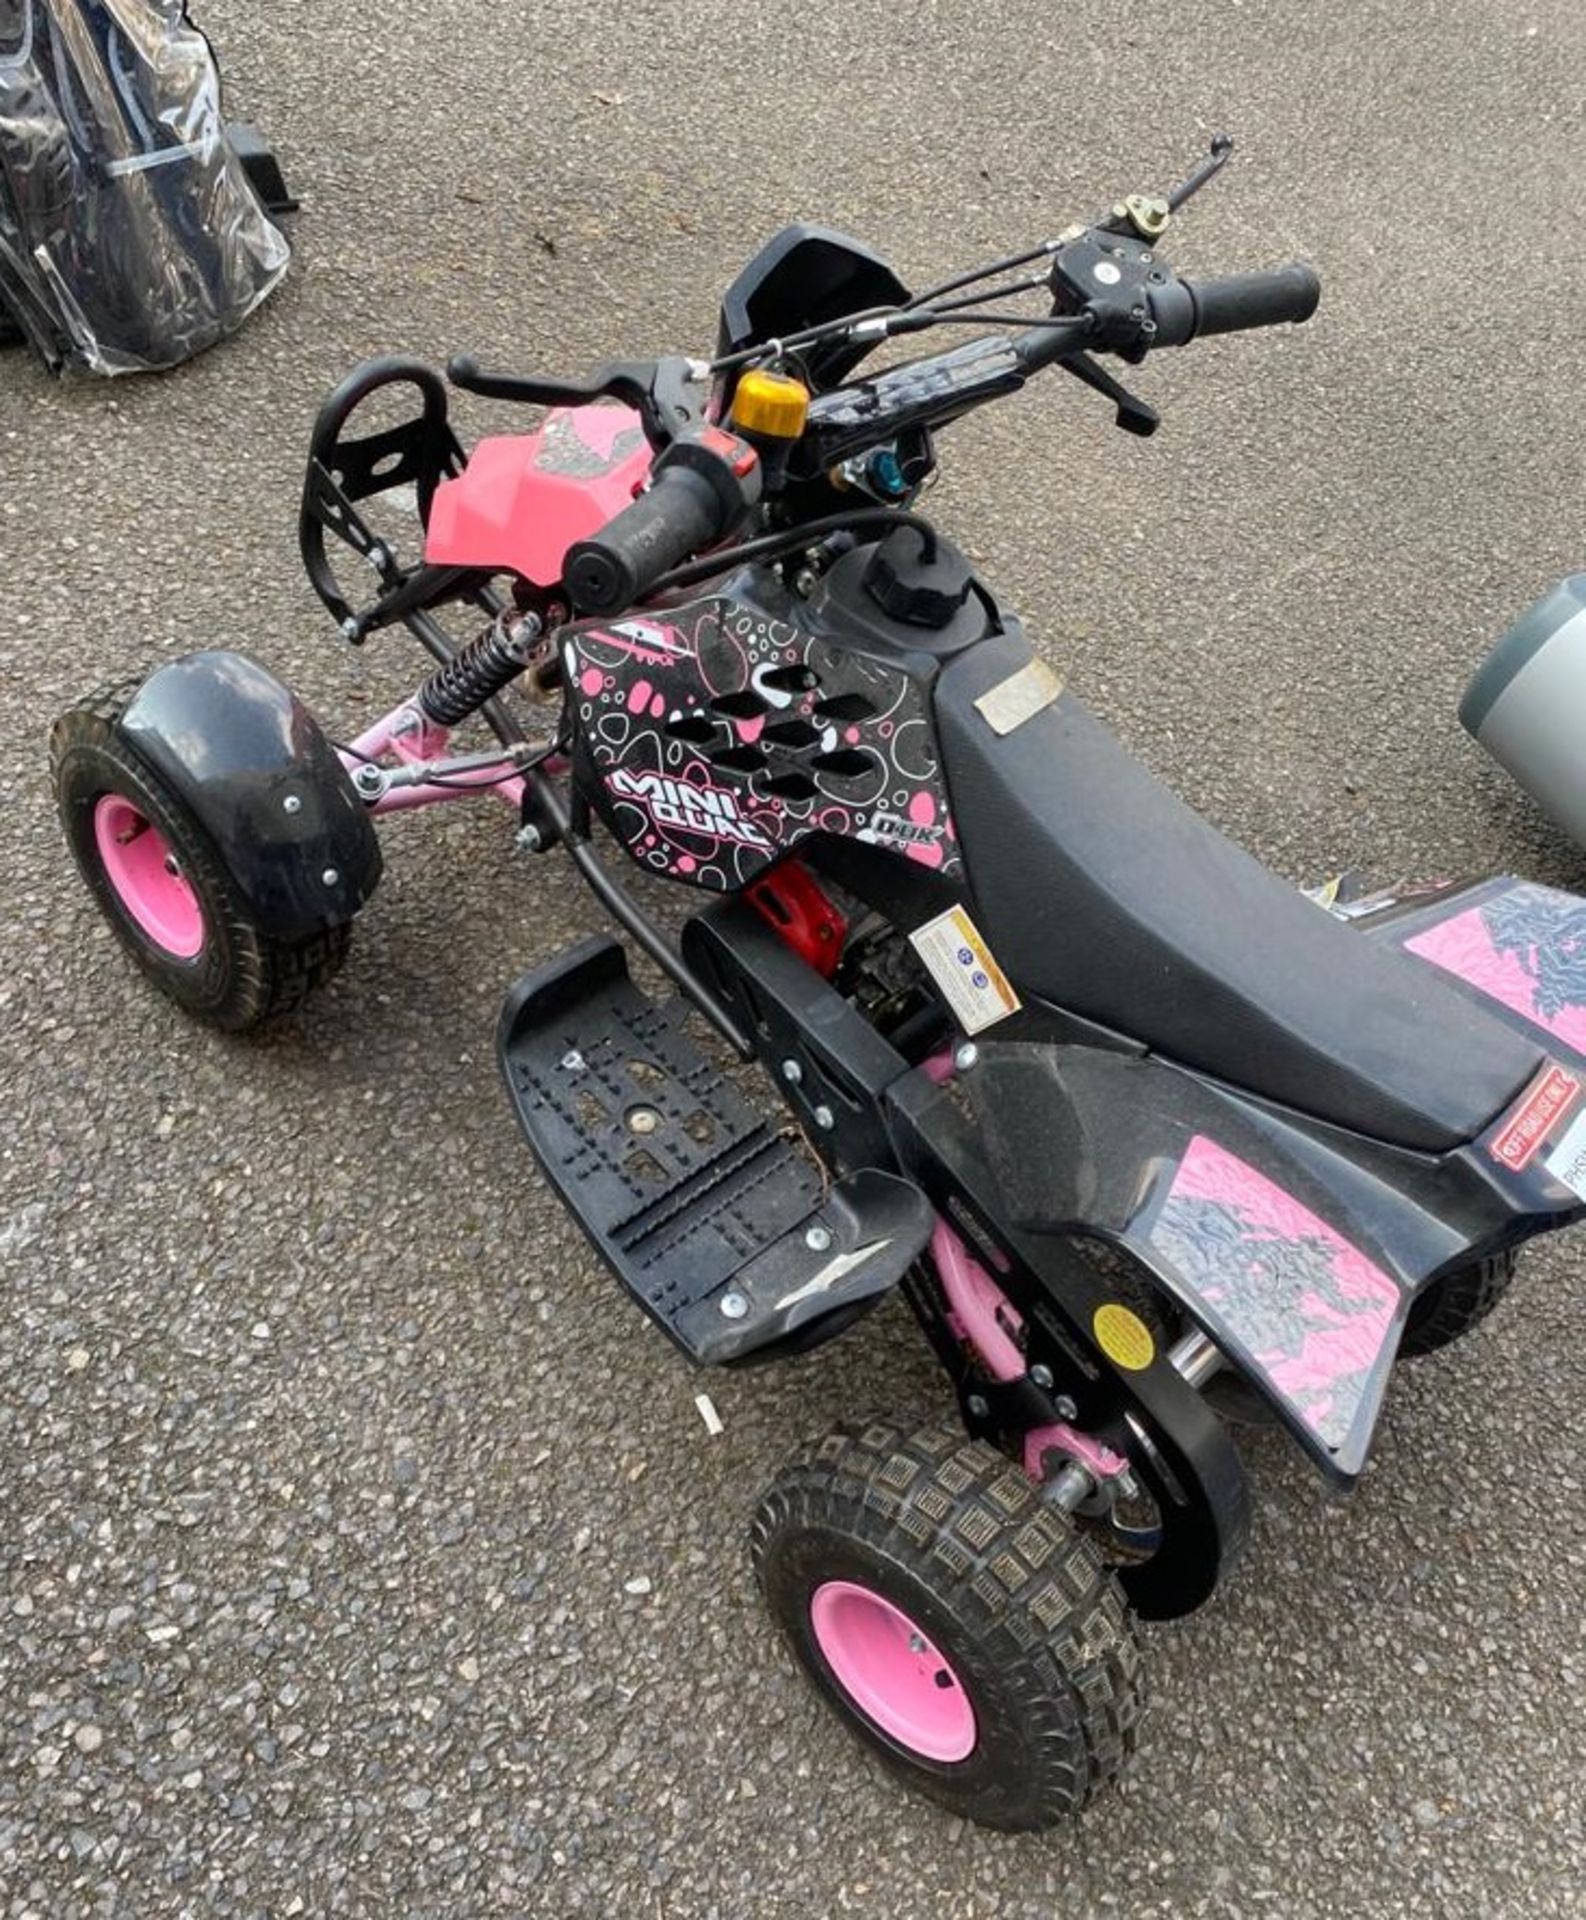 1 x Mini Quad Bike With Petrol Engine - Pink Colour - Image 2 of 5